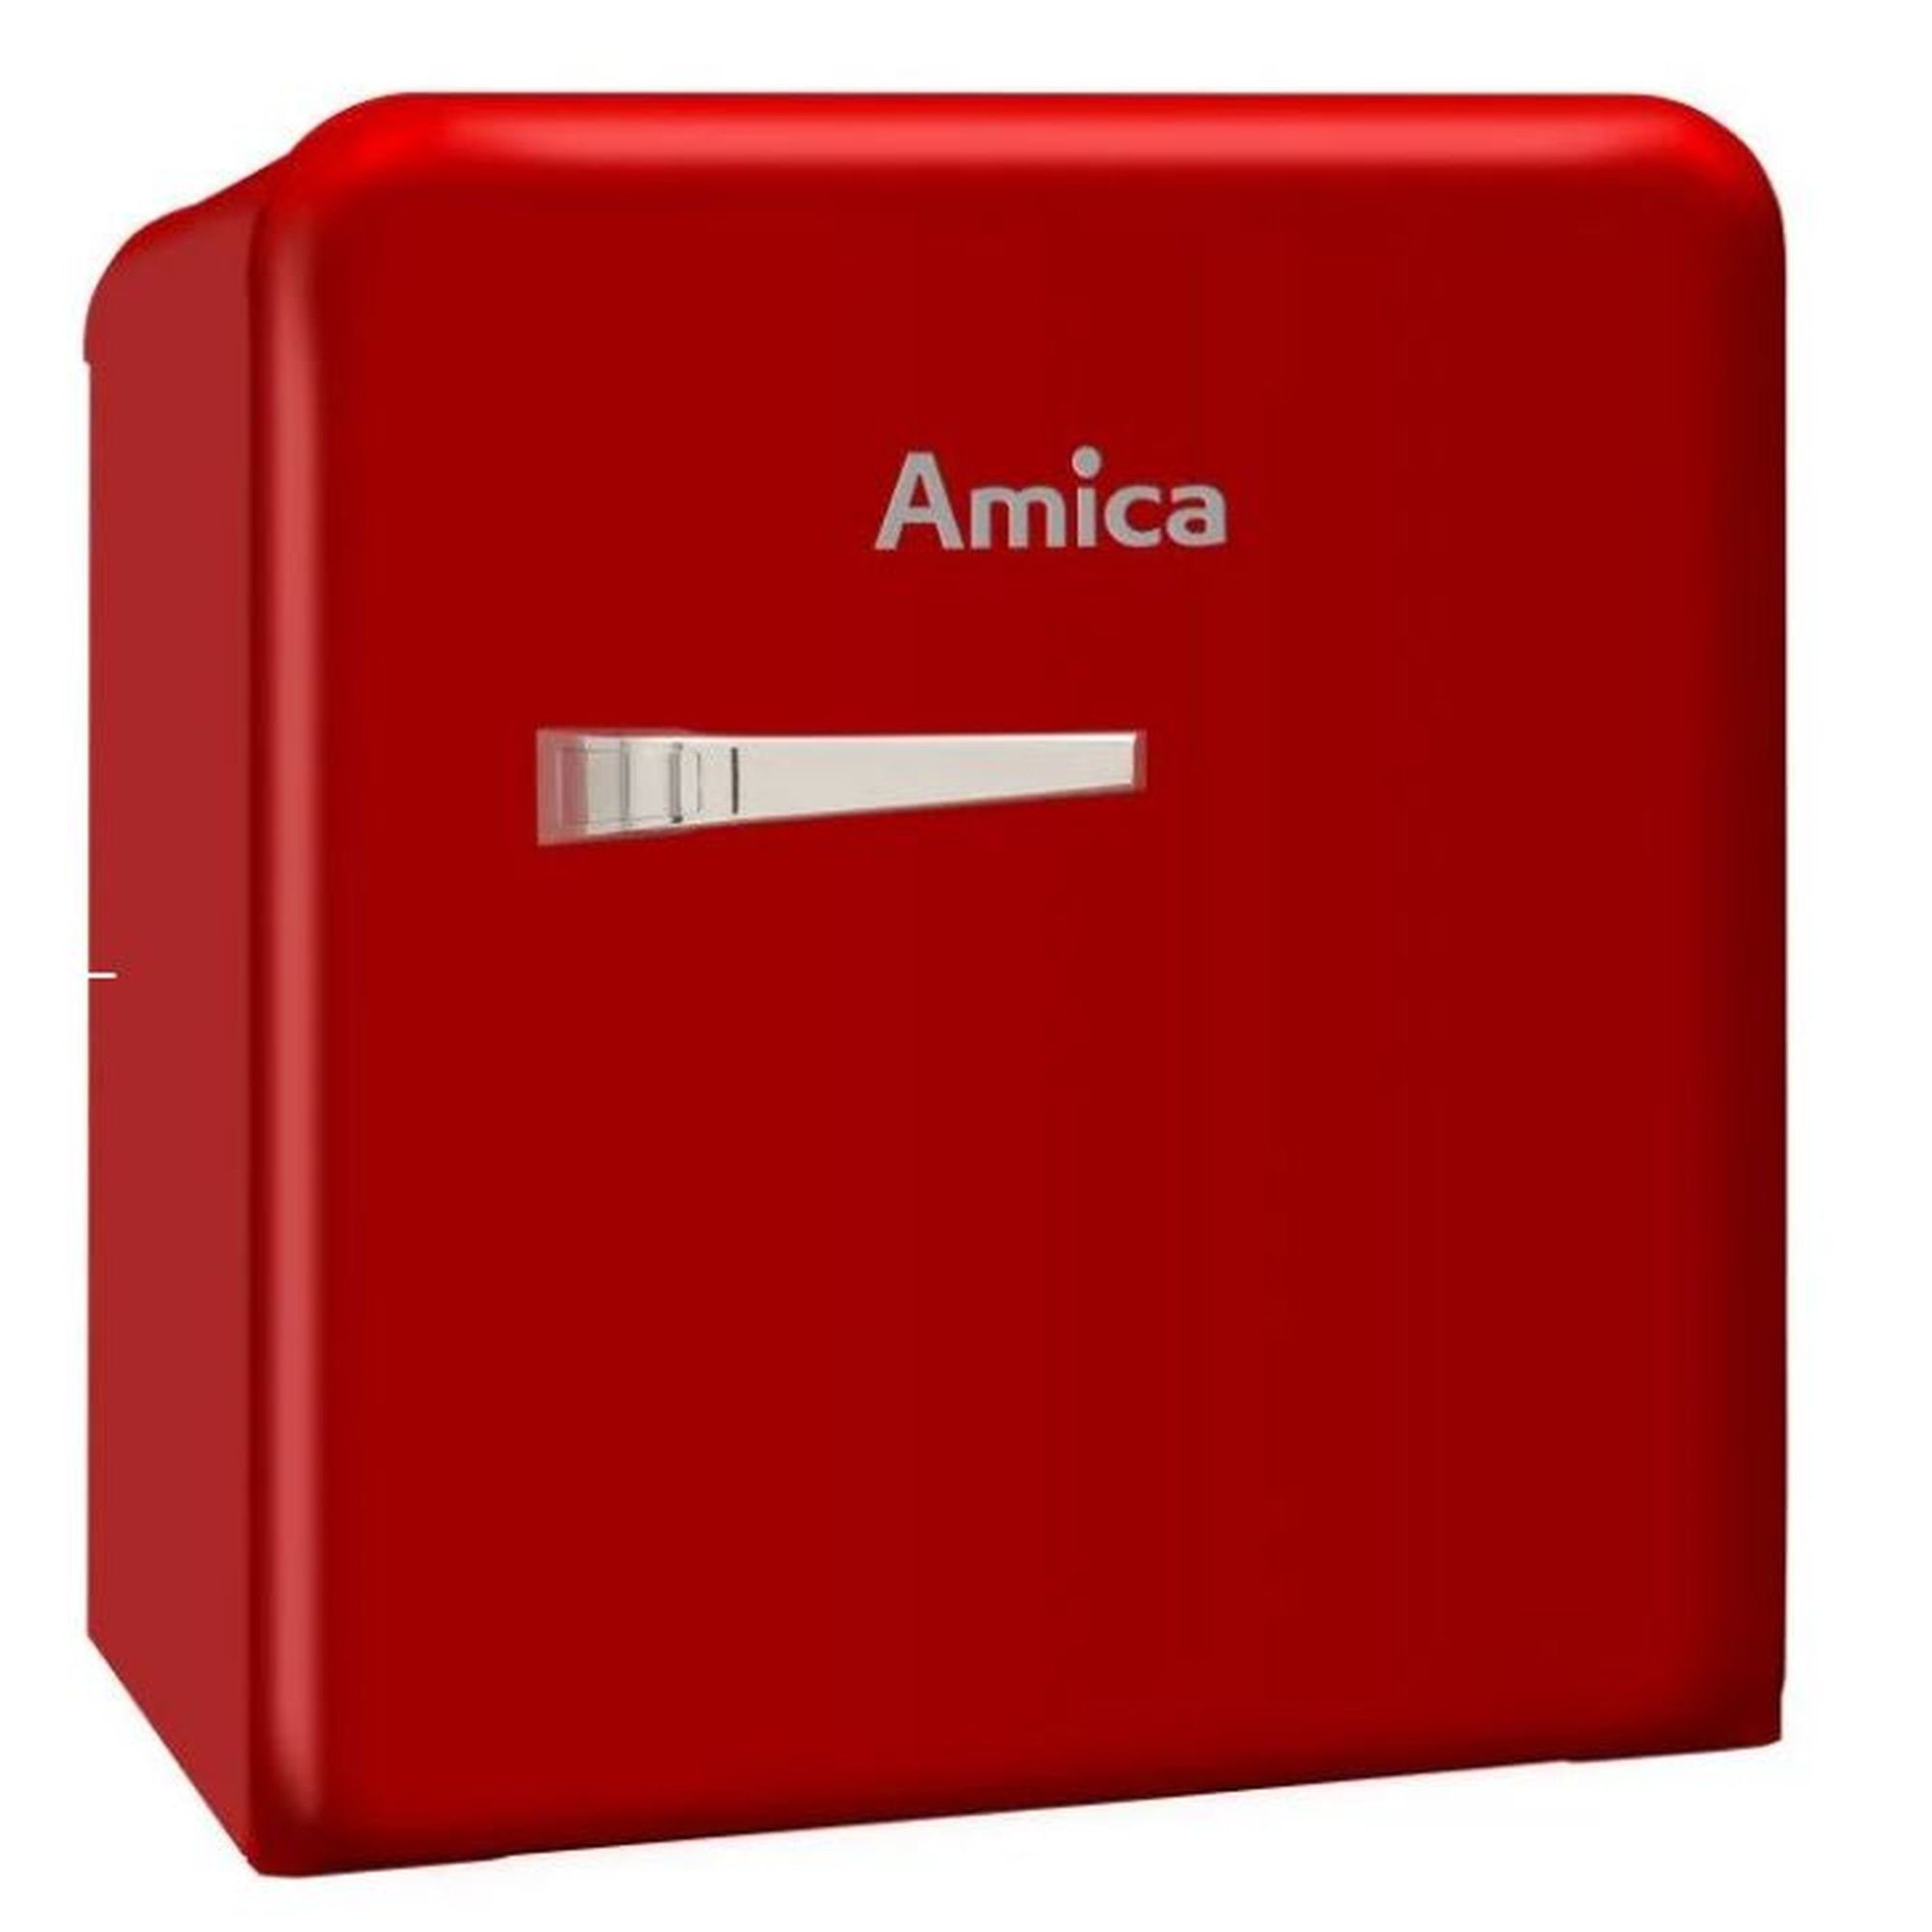 Amica Kühlschrank KBR 331 100 R